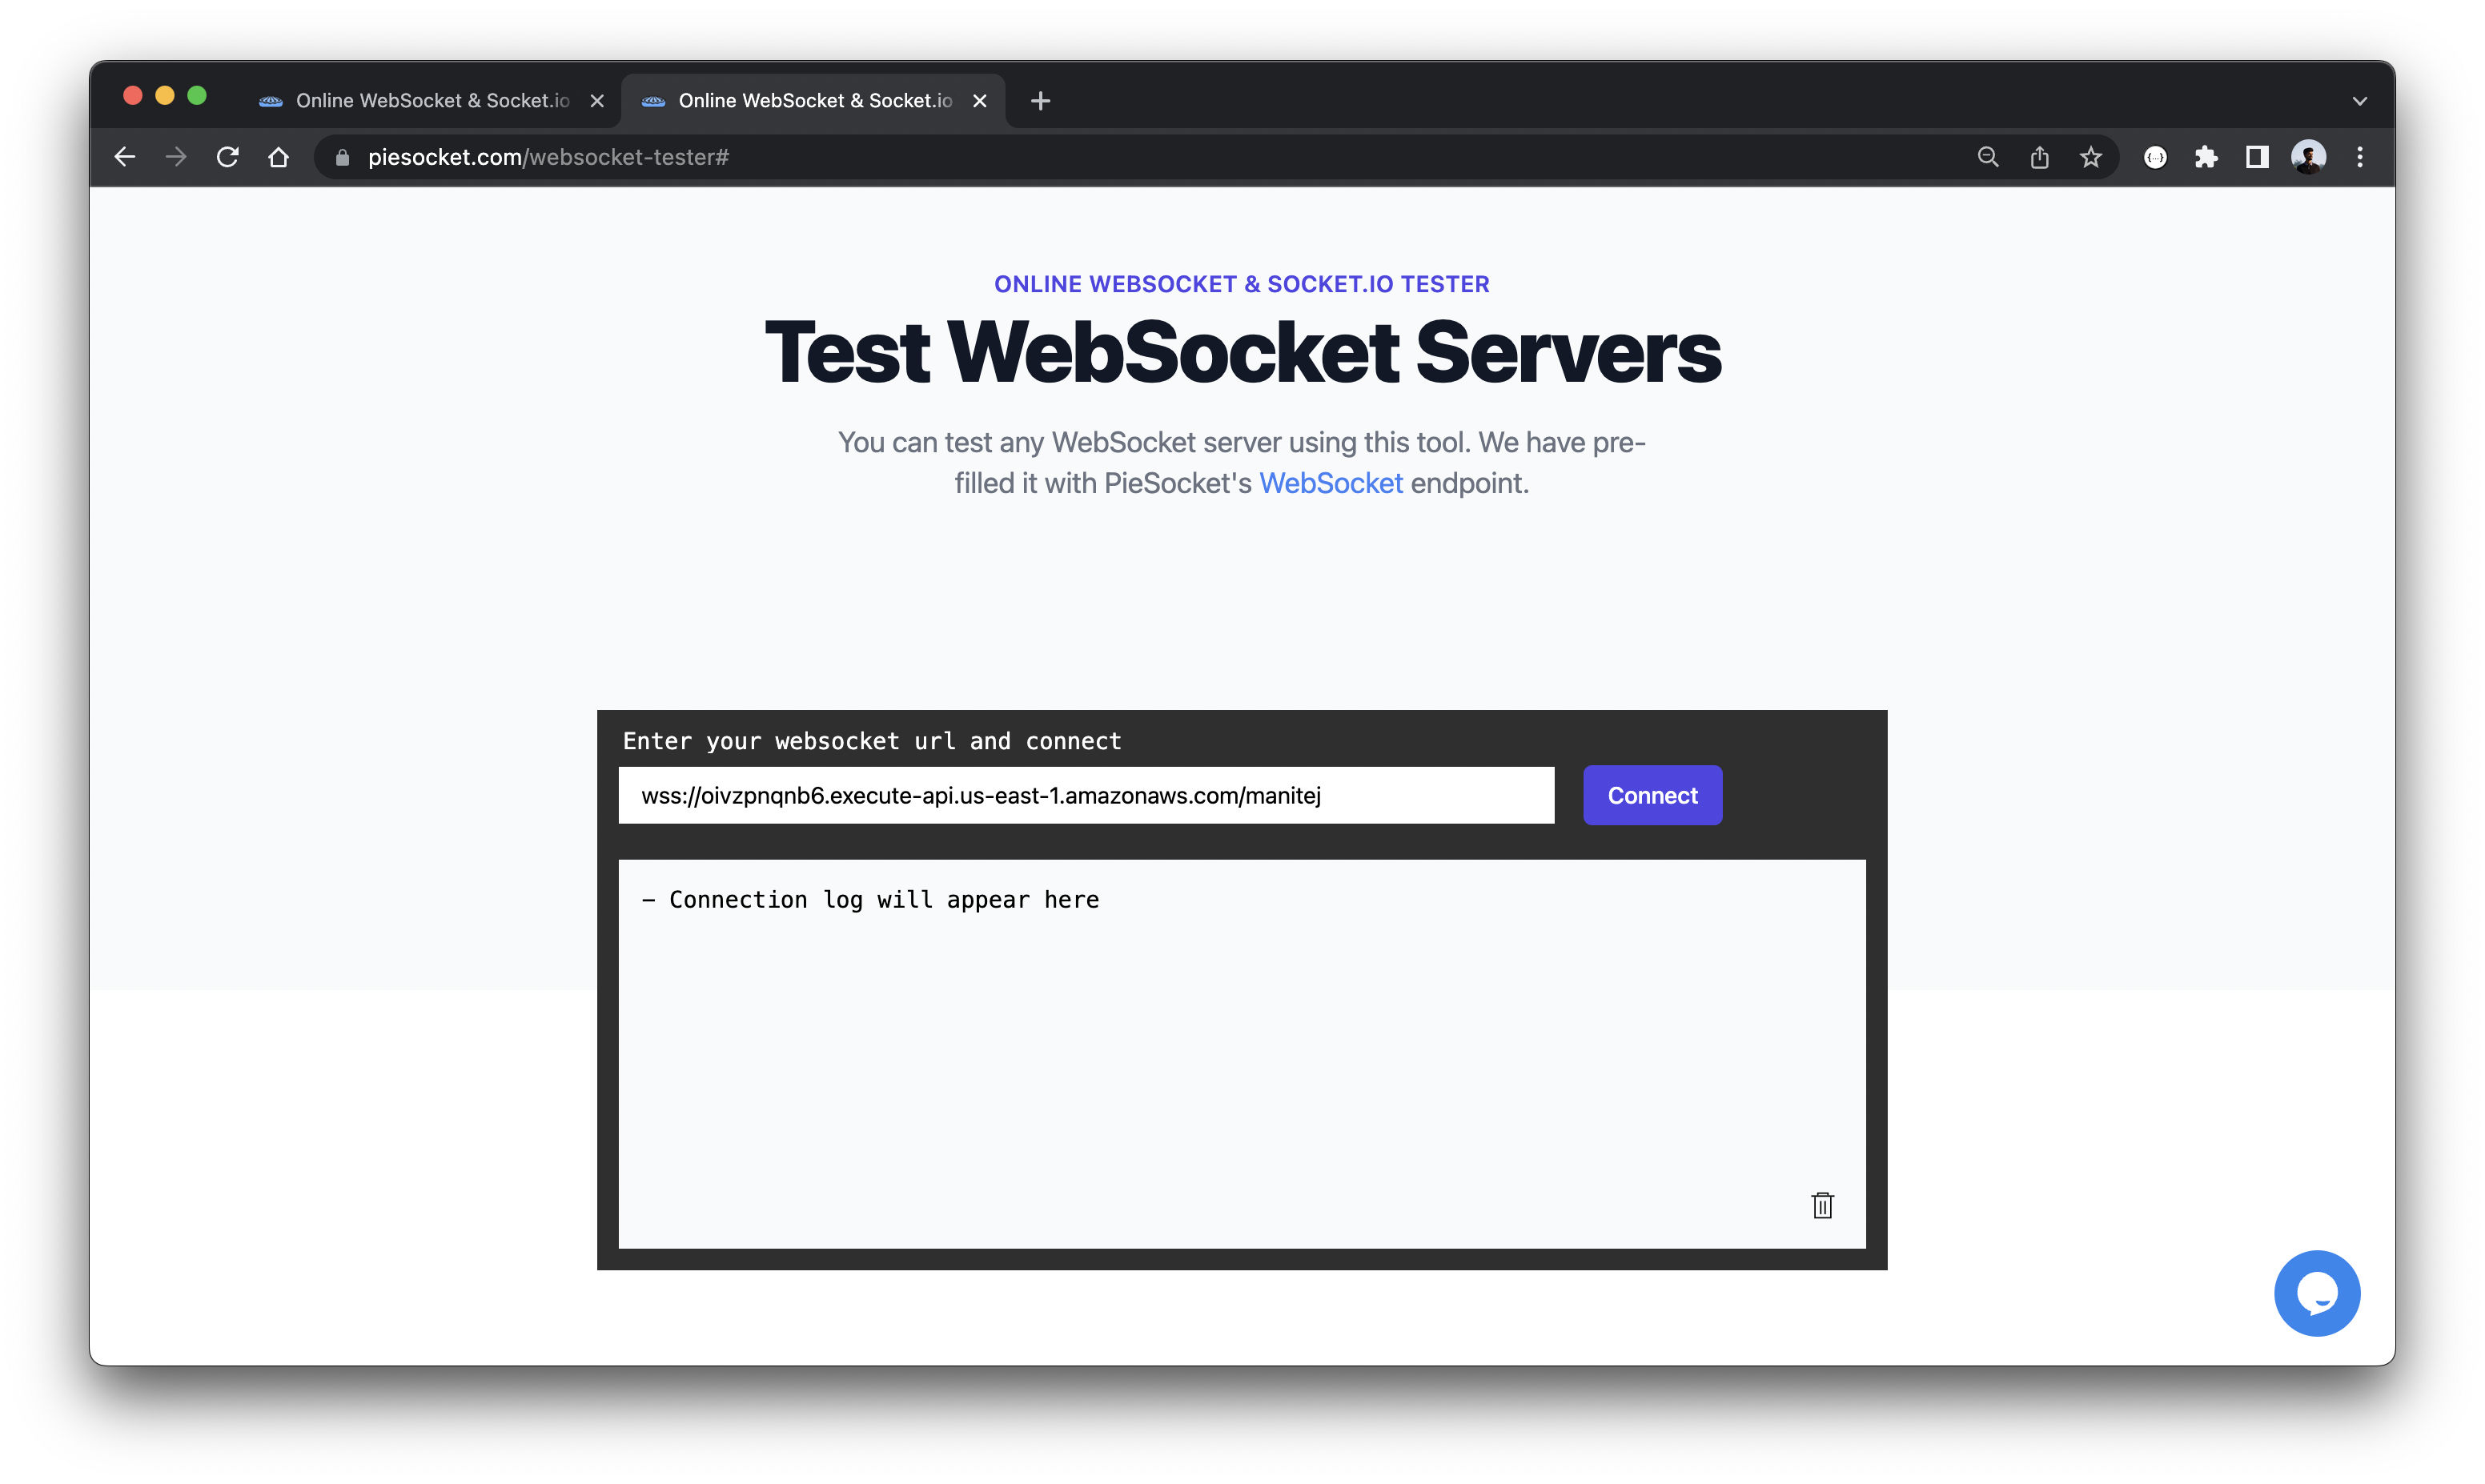 Connect to serverless WebSocket API again